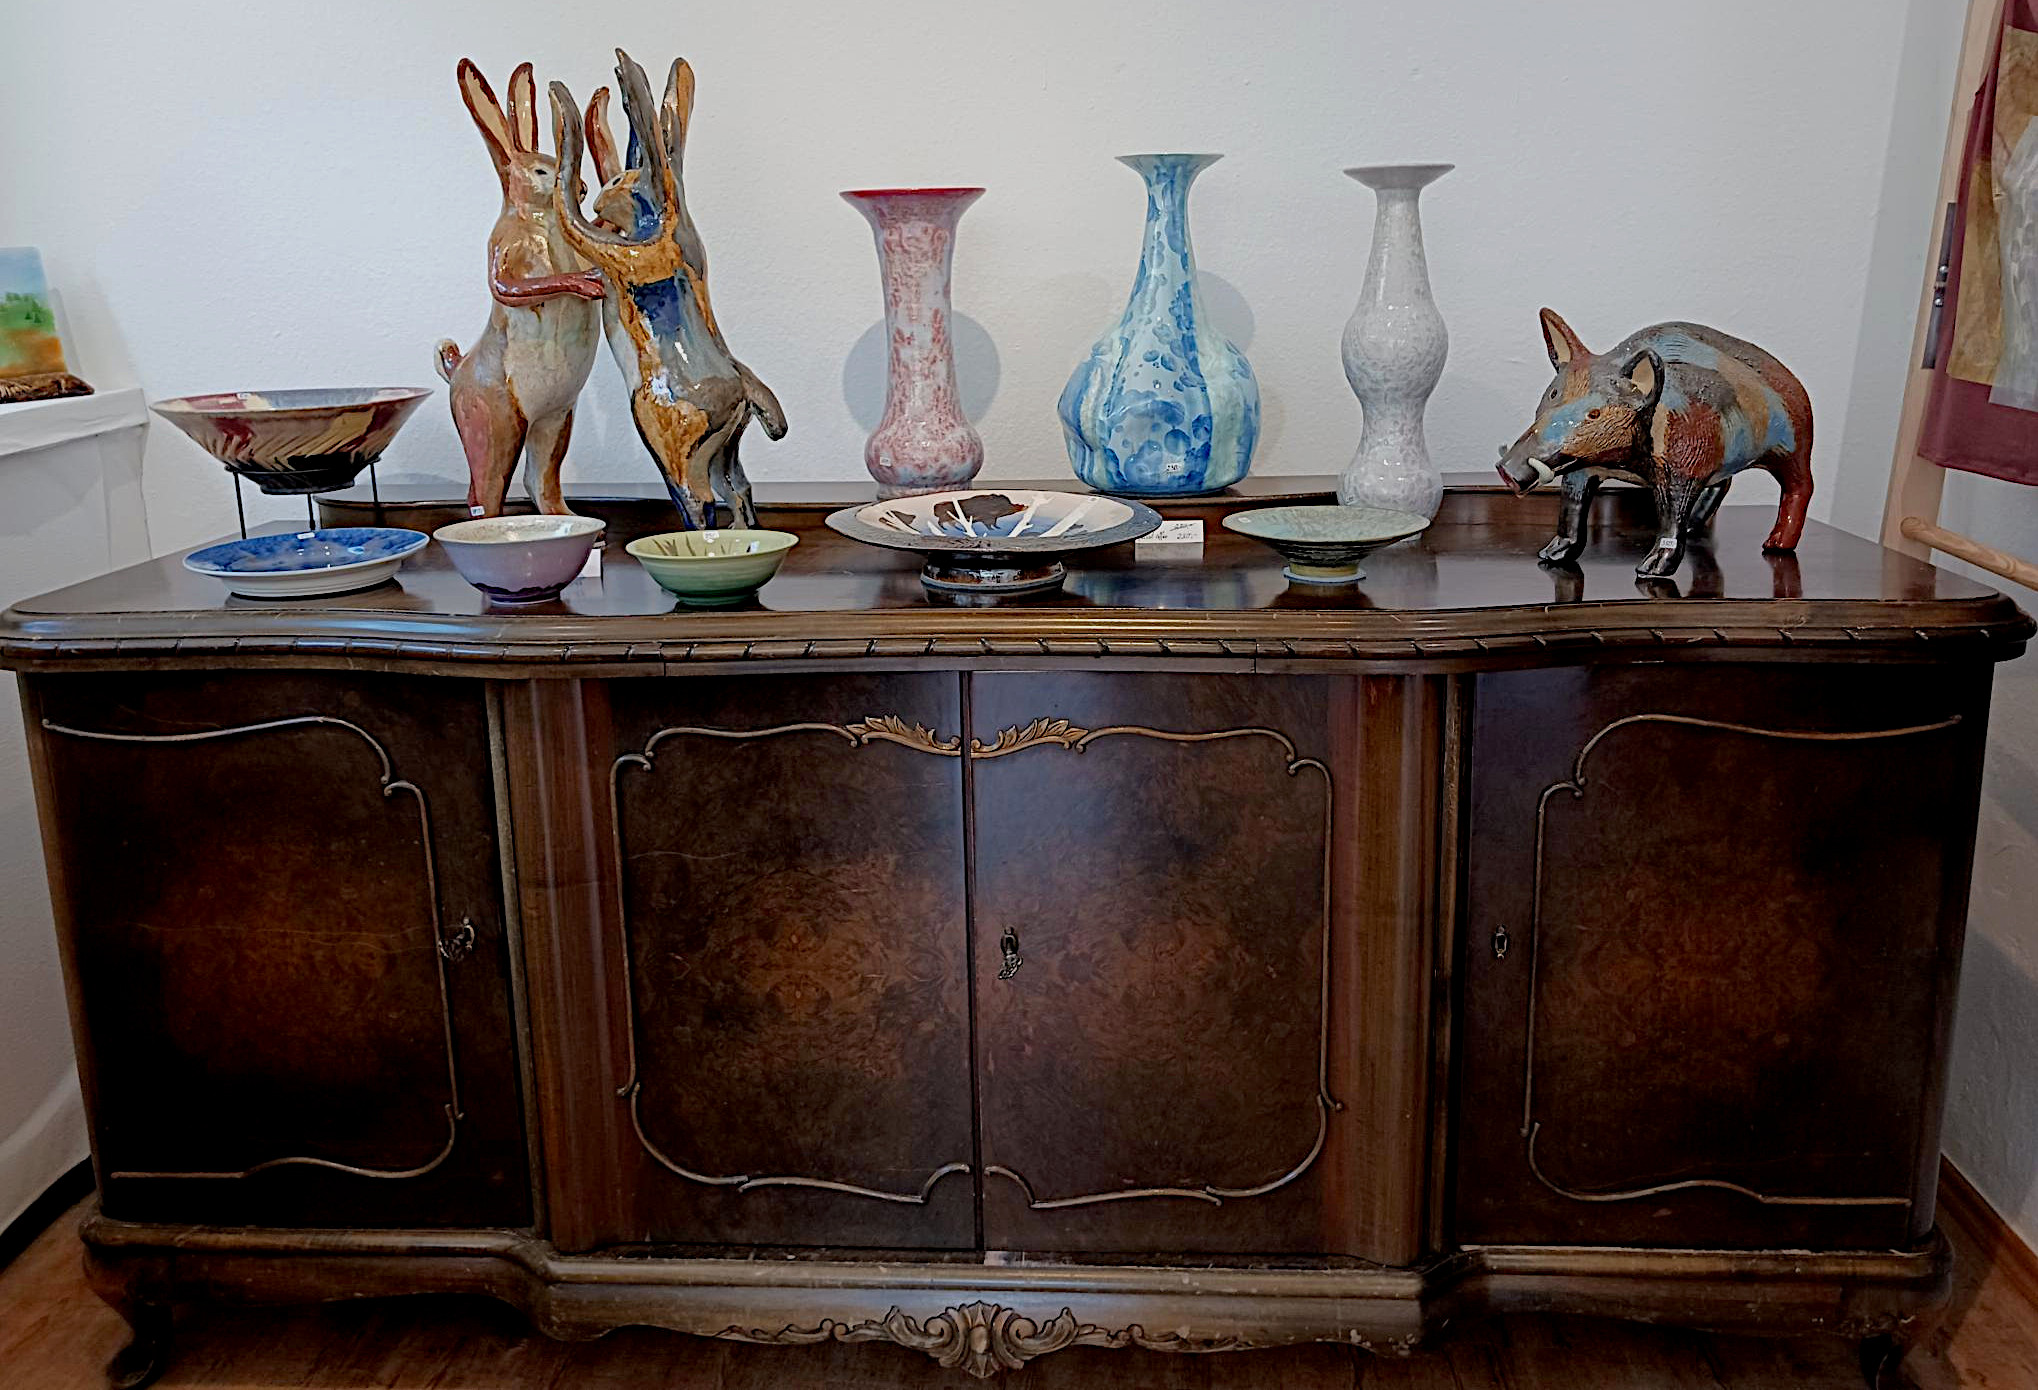 Hinterwand im Laden mit Exponaten - Vasen, Teller, Tierskulpturen